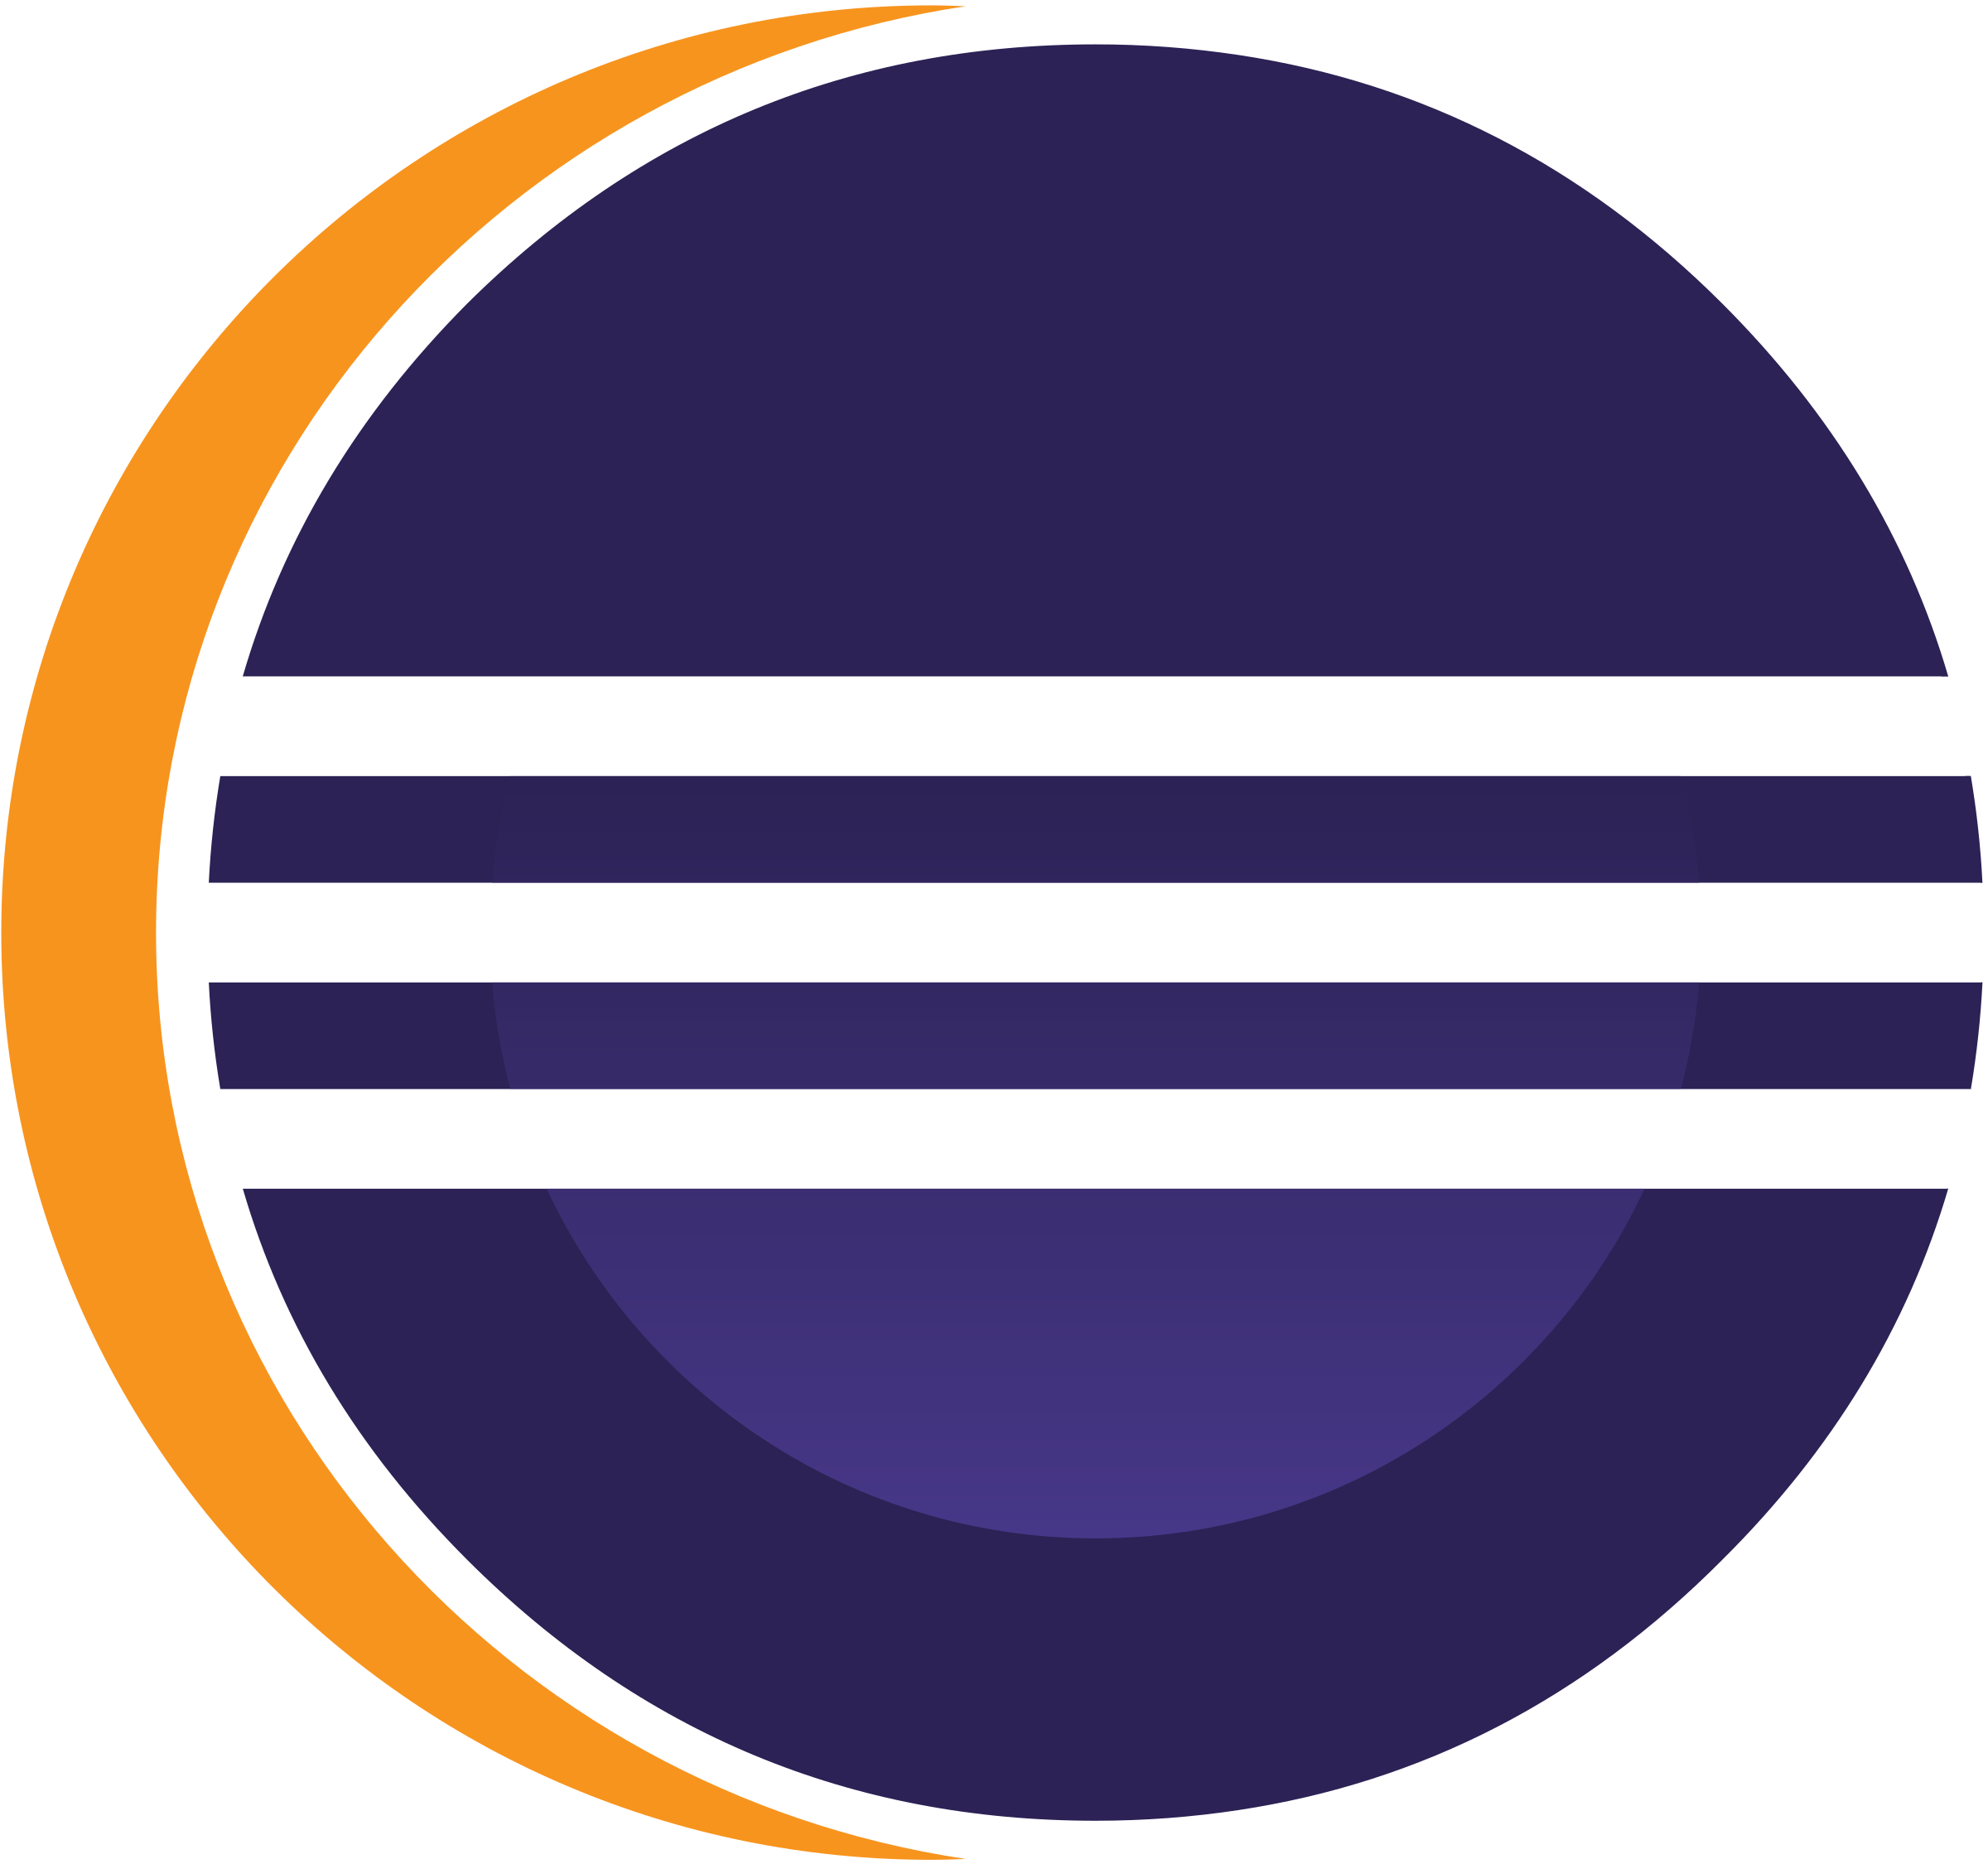 Eclipse Logo - Eclipse Logo PNG Transparent & SVG Vector - Freebie Supply